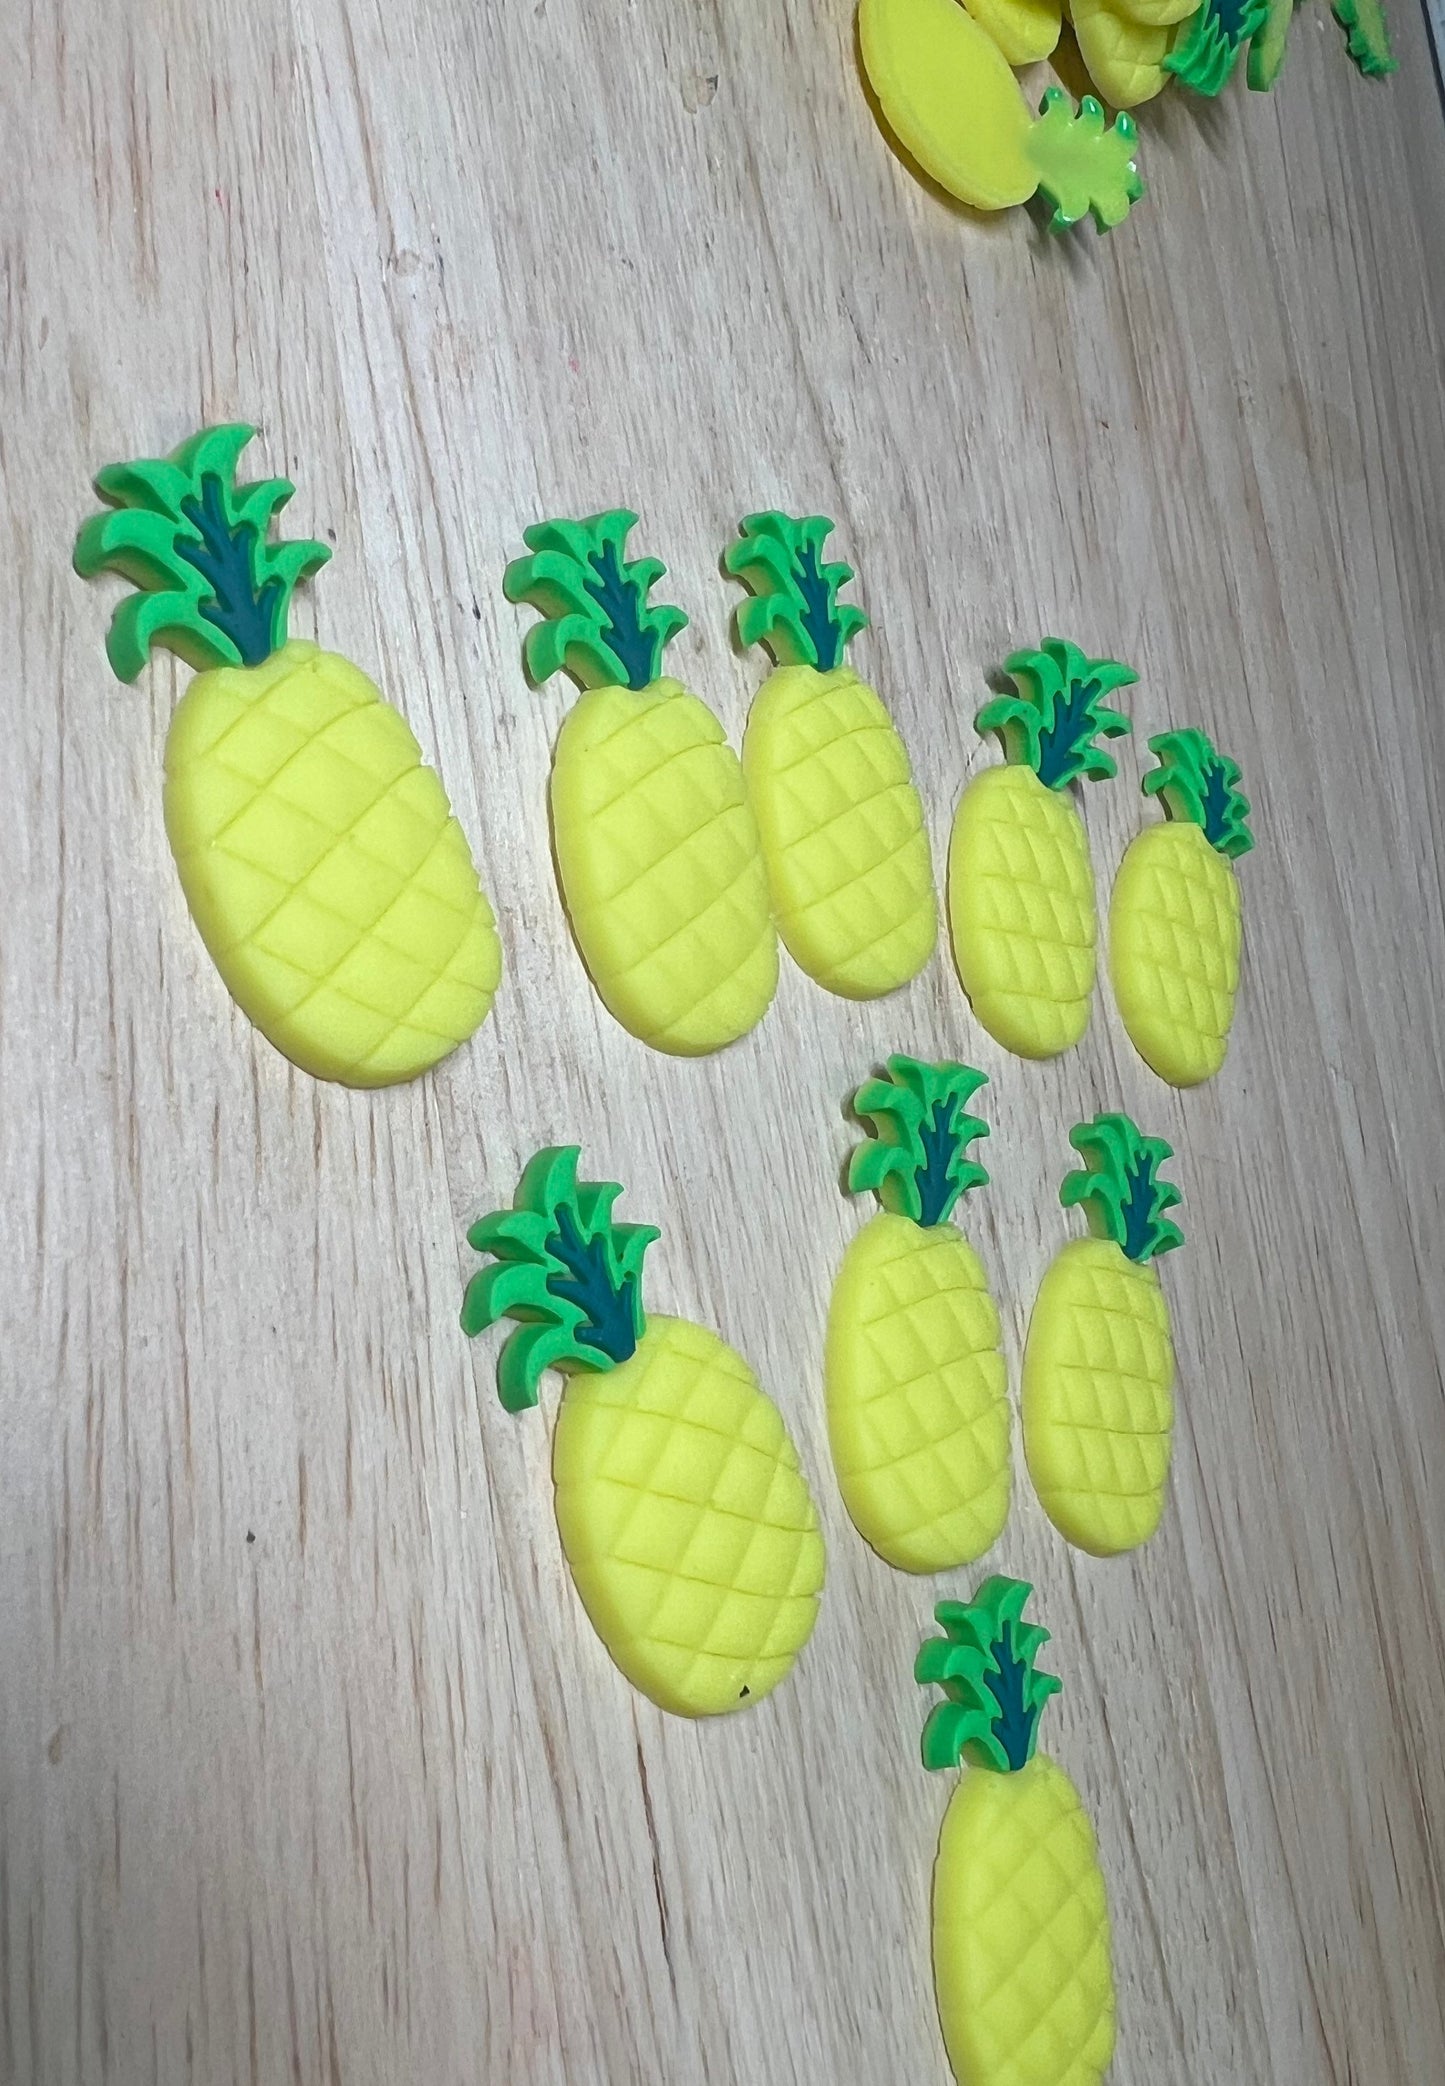 Mini PINEAPPLE Object-Food Theme Objects-Fruit Mini Objects-Montessori Language Objects-Alphabet Trinkets-Fruit Trinkets-